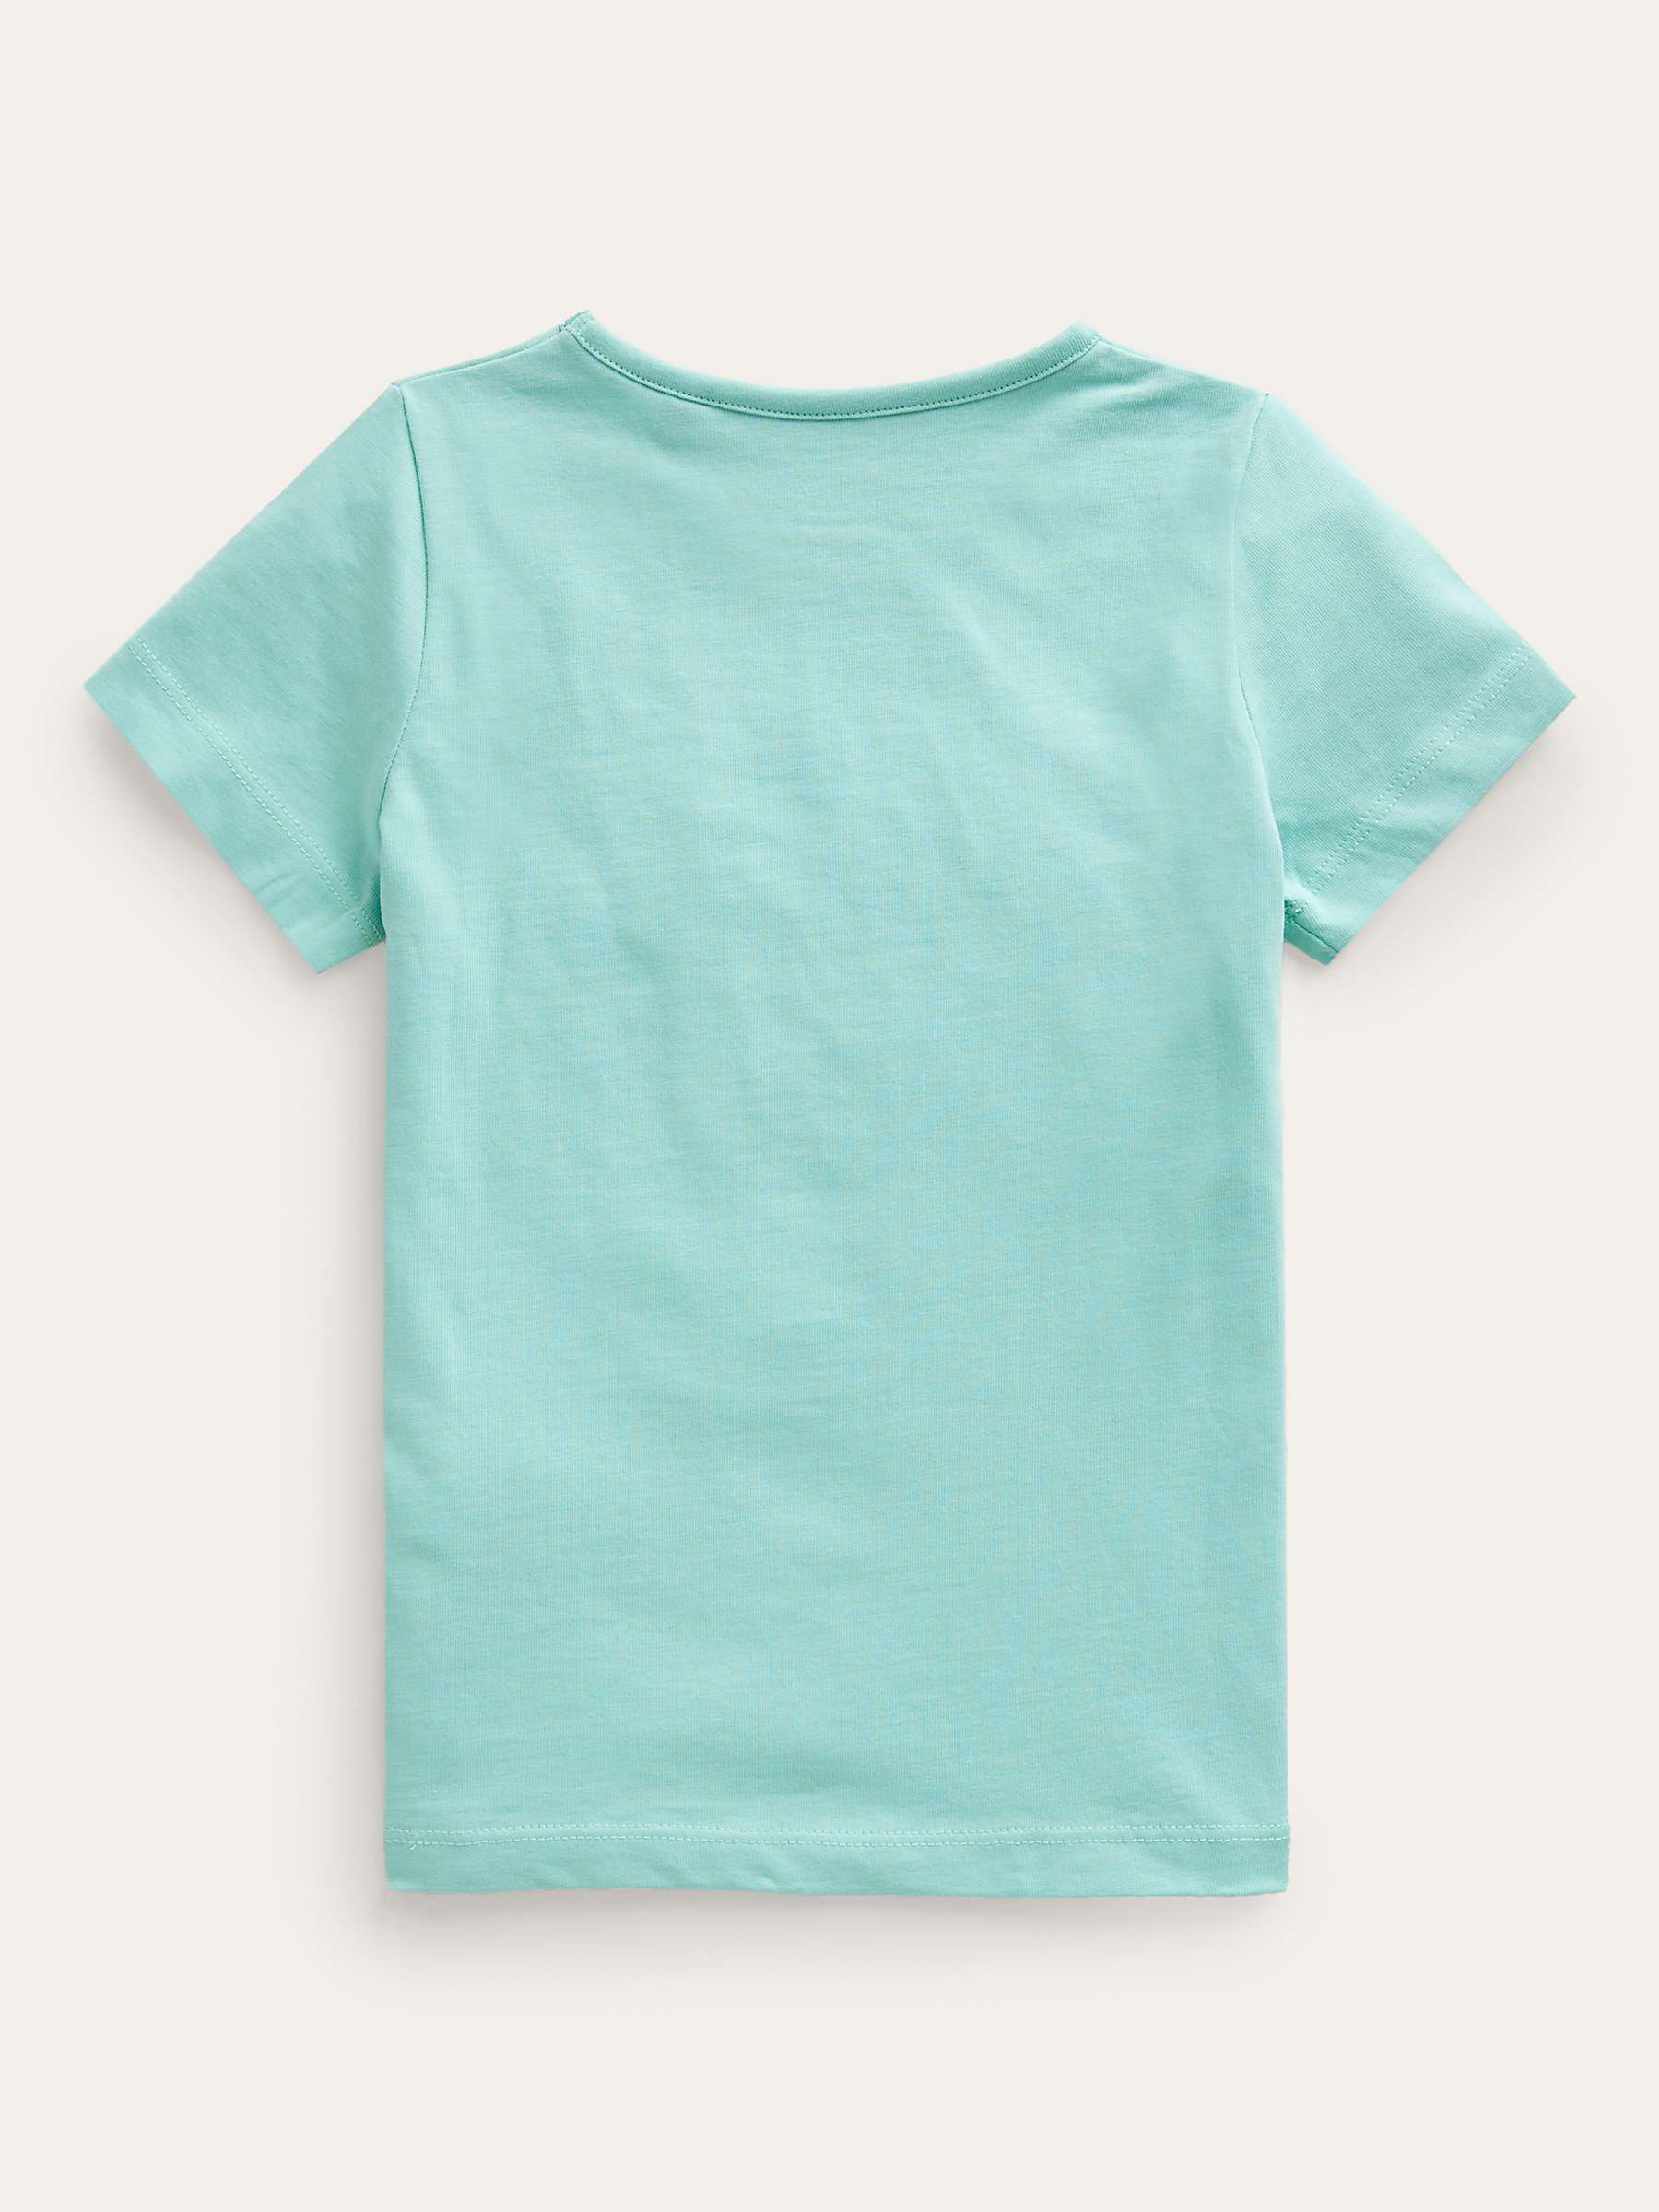 Buy Mini Boden Kids' Tutti Al Mare Fun T-Shirt, Cream/Multi Online at johnlewis.com